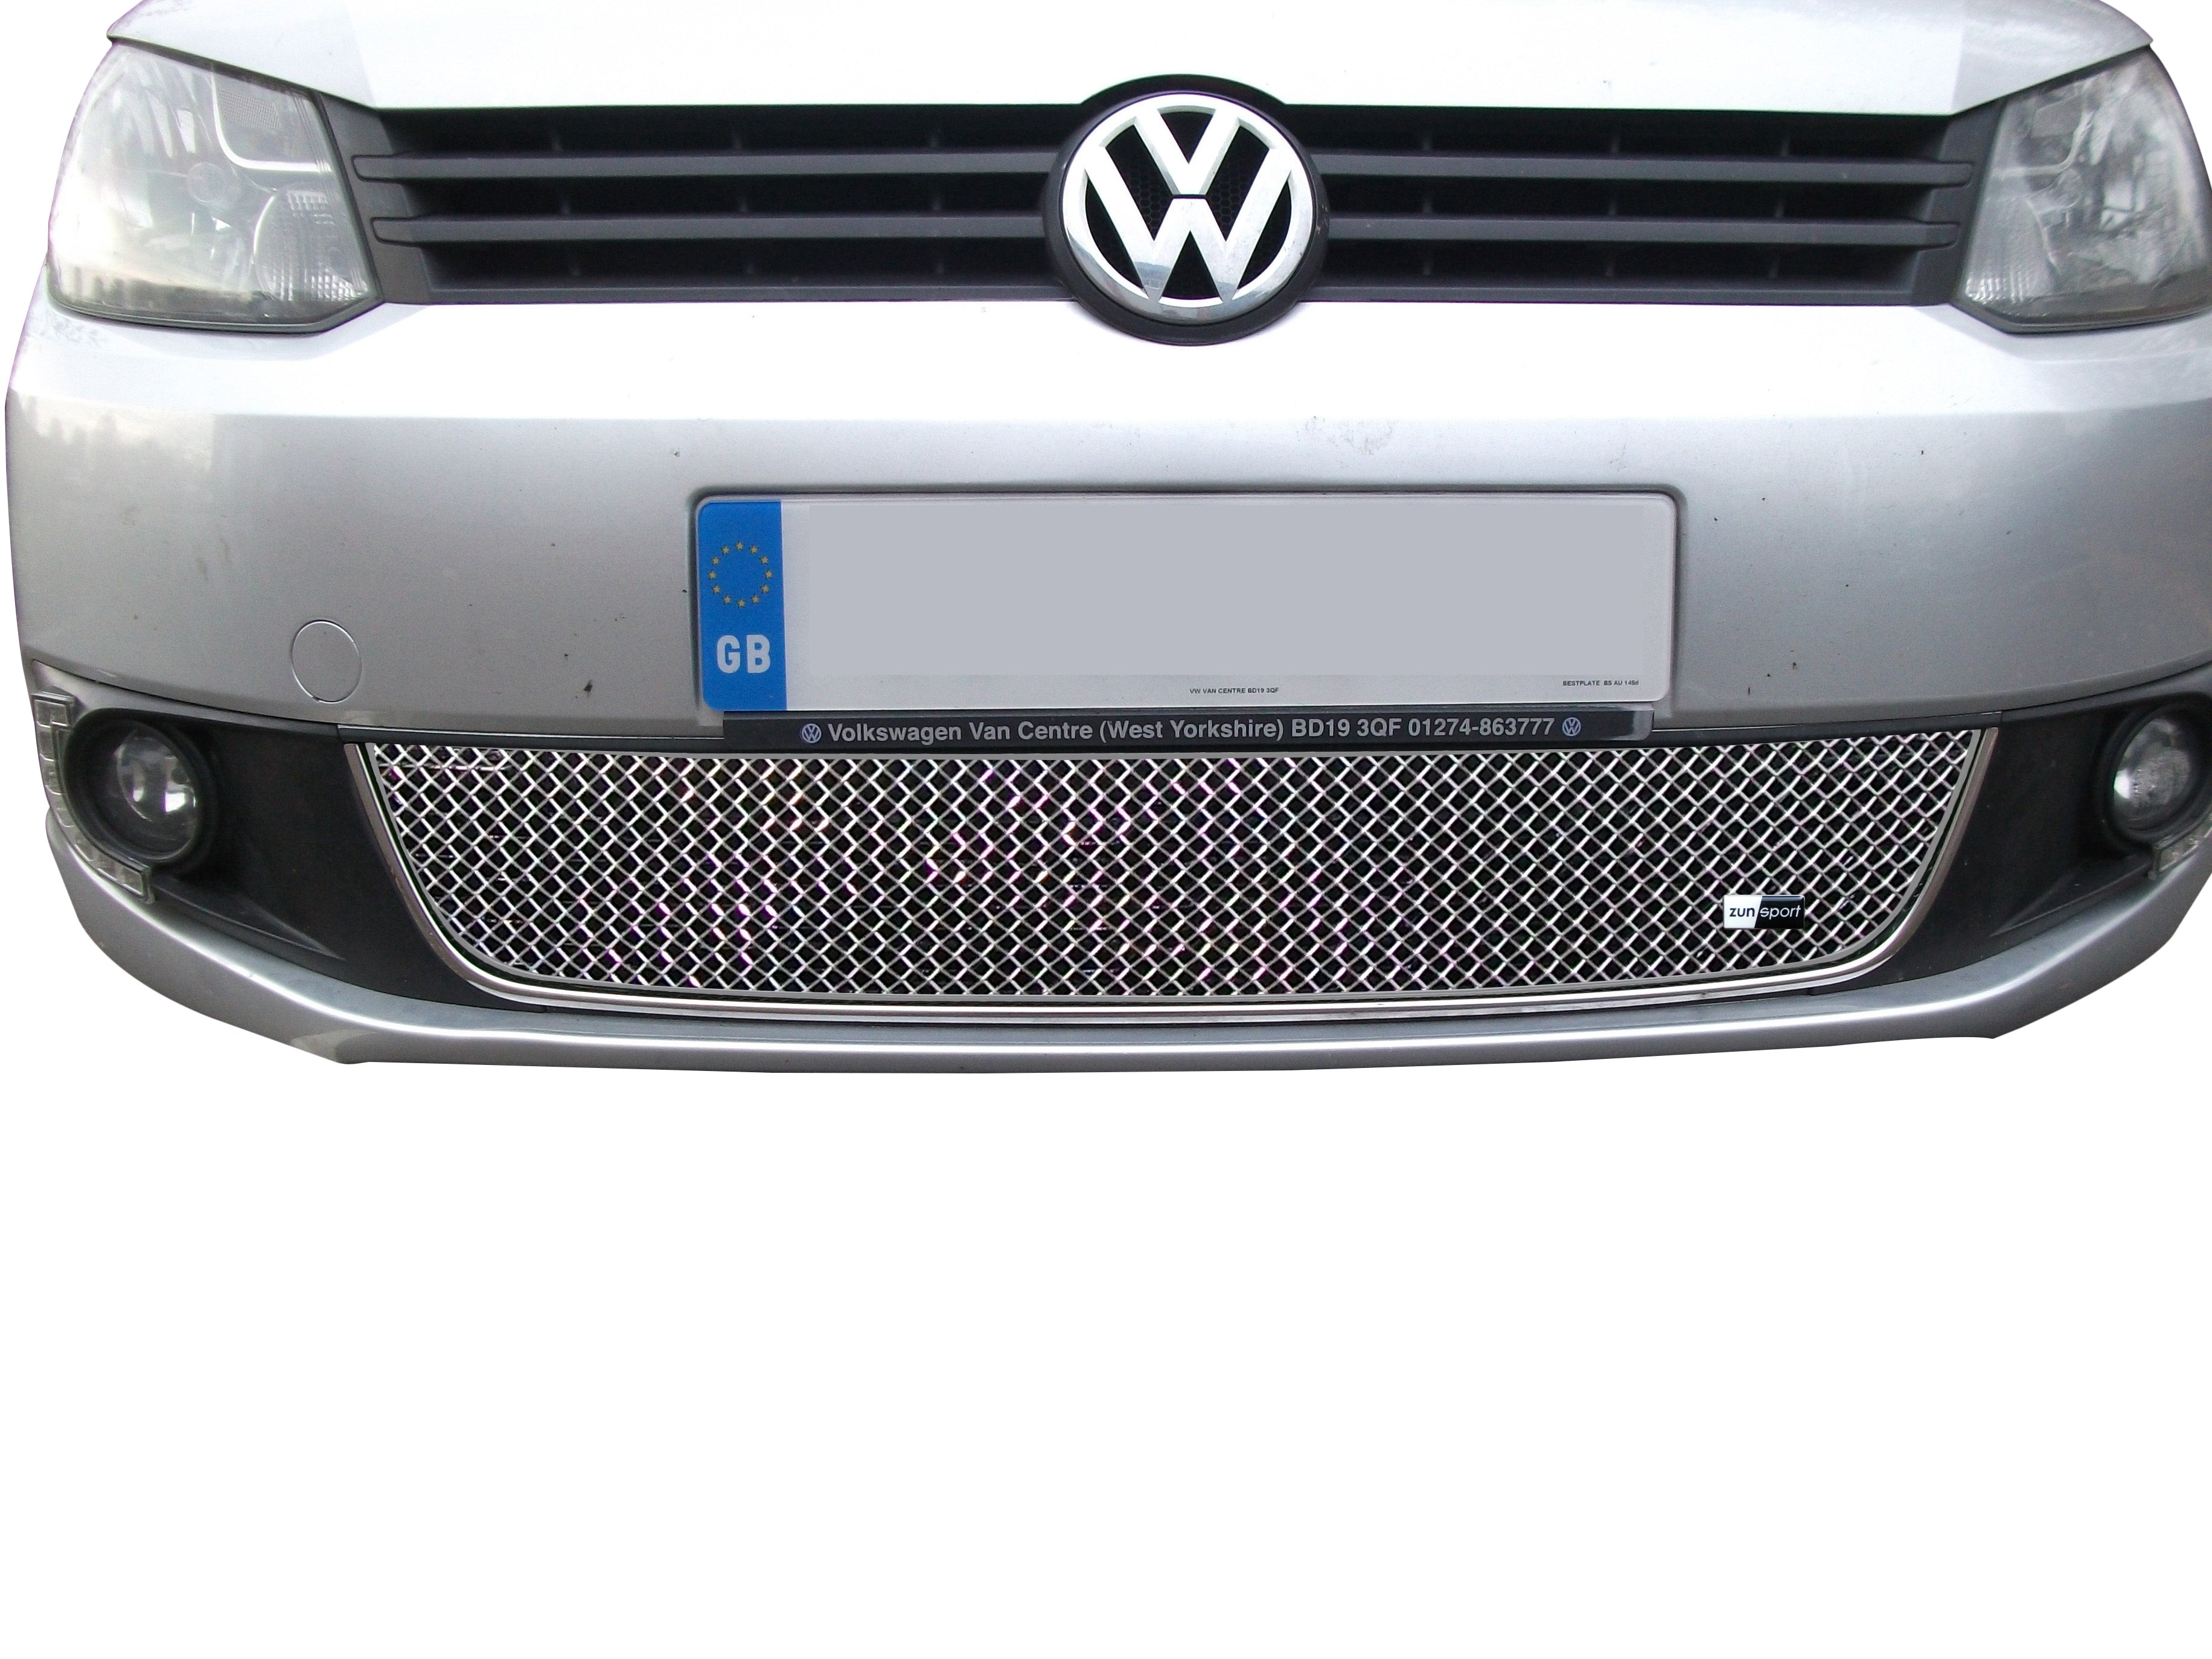 Zunsport VW Caddy Facelift Van 2011 - Lower Grille